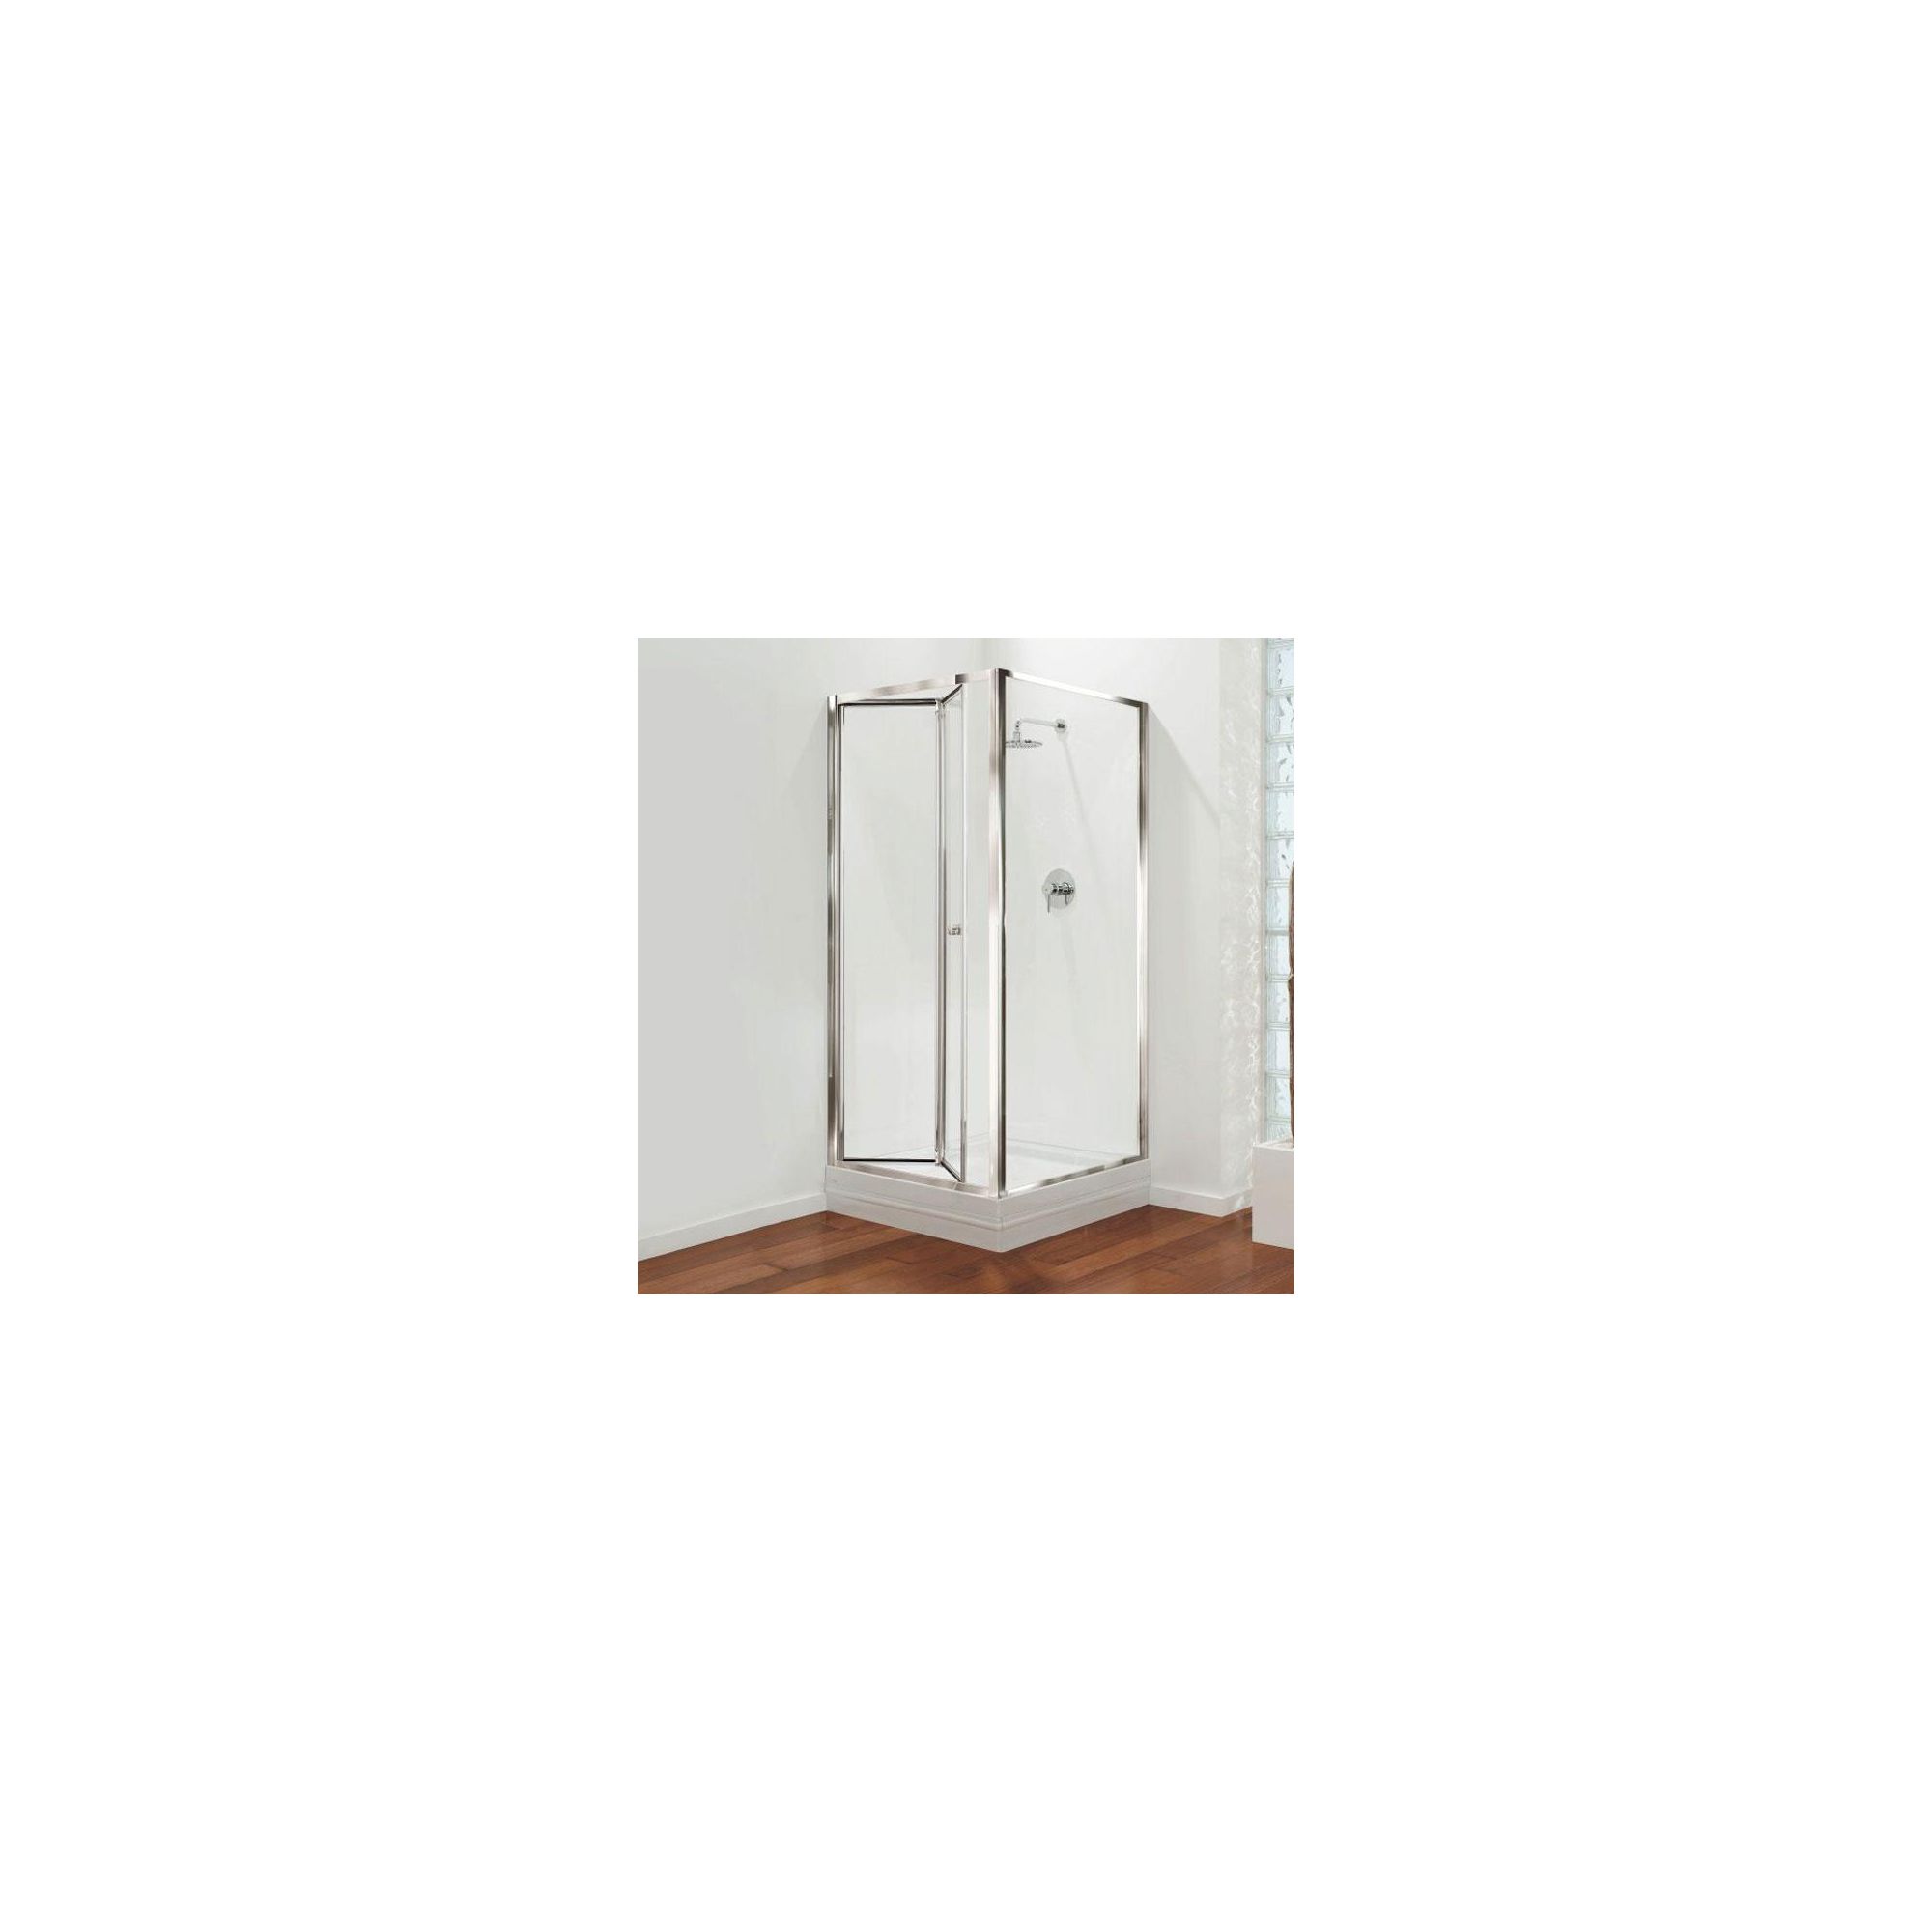 Coram GB Bi-Fold Door Shower Enclosure, 760mm x 760mm, Standard Tray, 4mm Glass, Chrome Frame at Tesco Direct